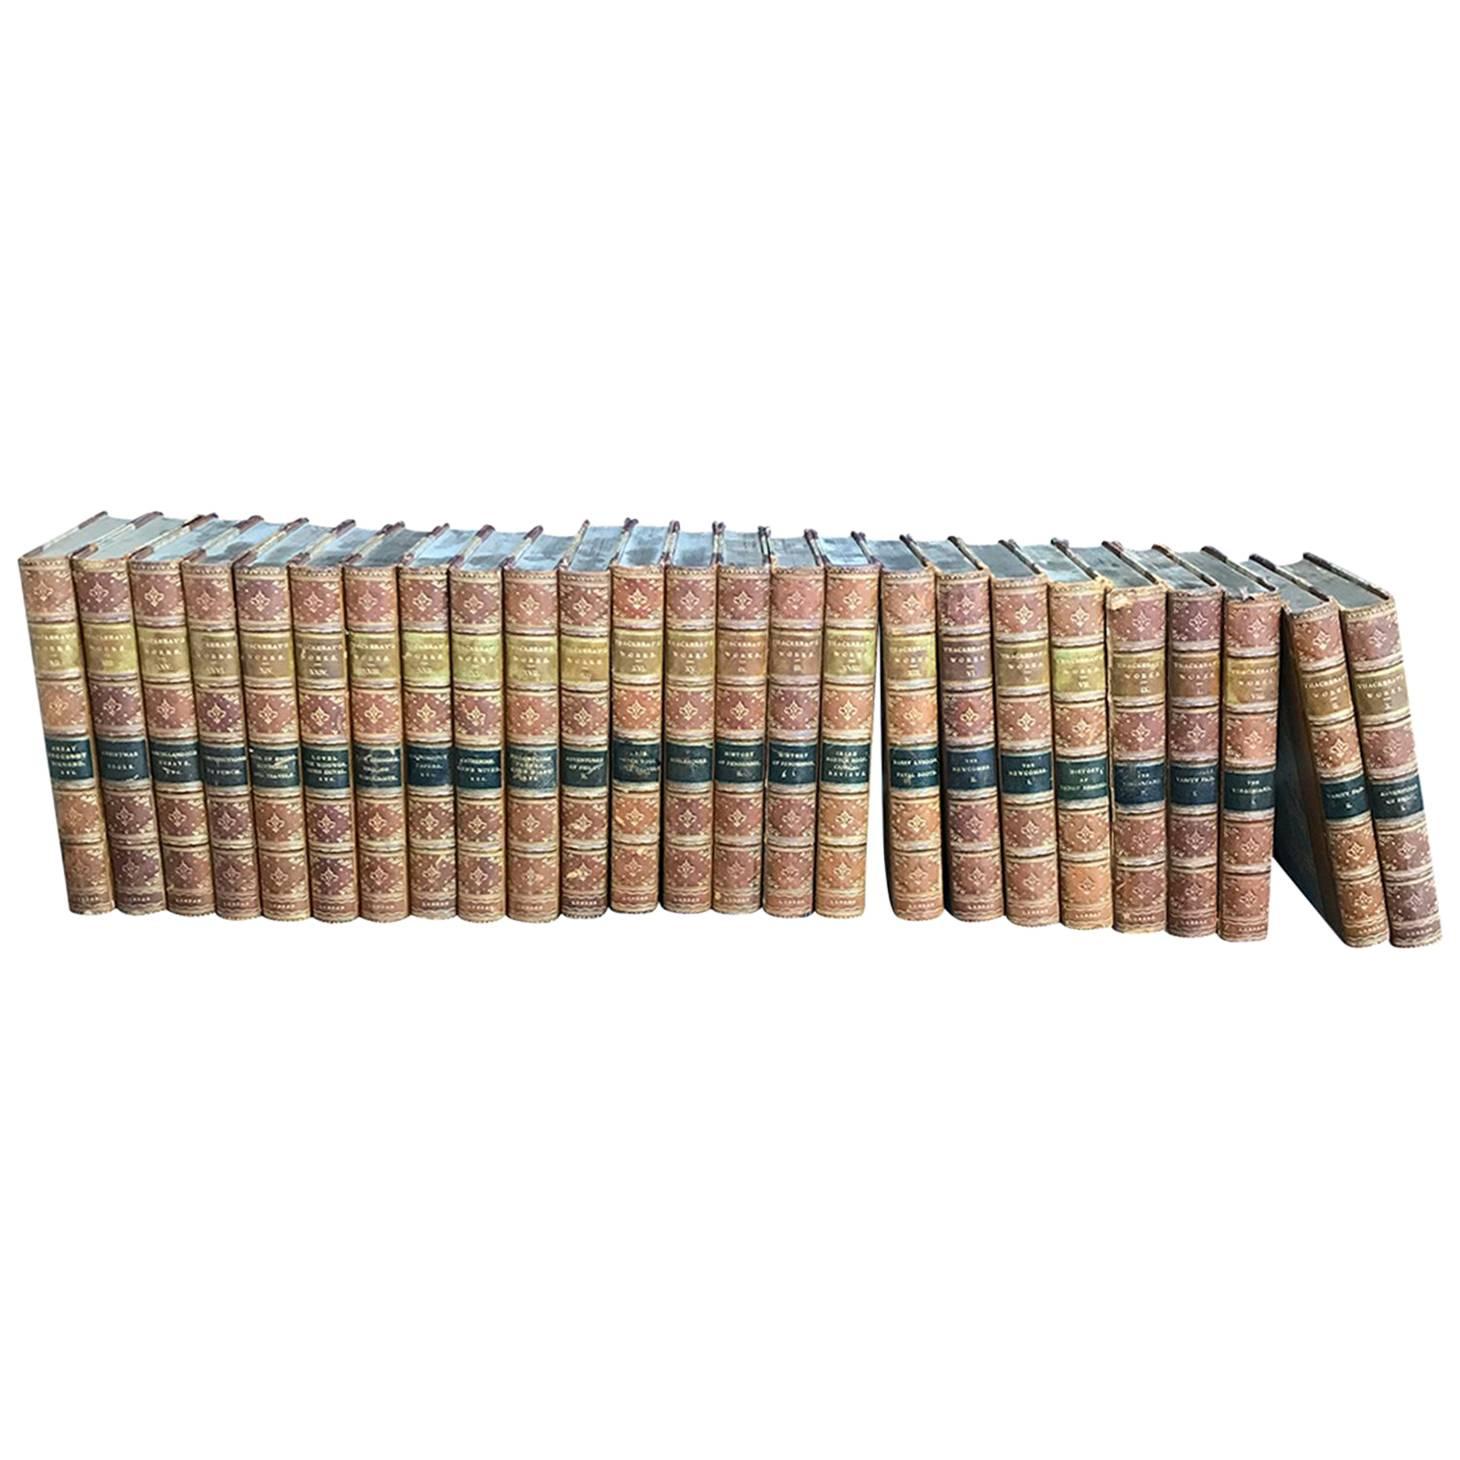 Set of 25, circa 1894 English Volumes by W.M.Thackeray